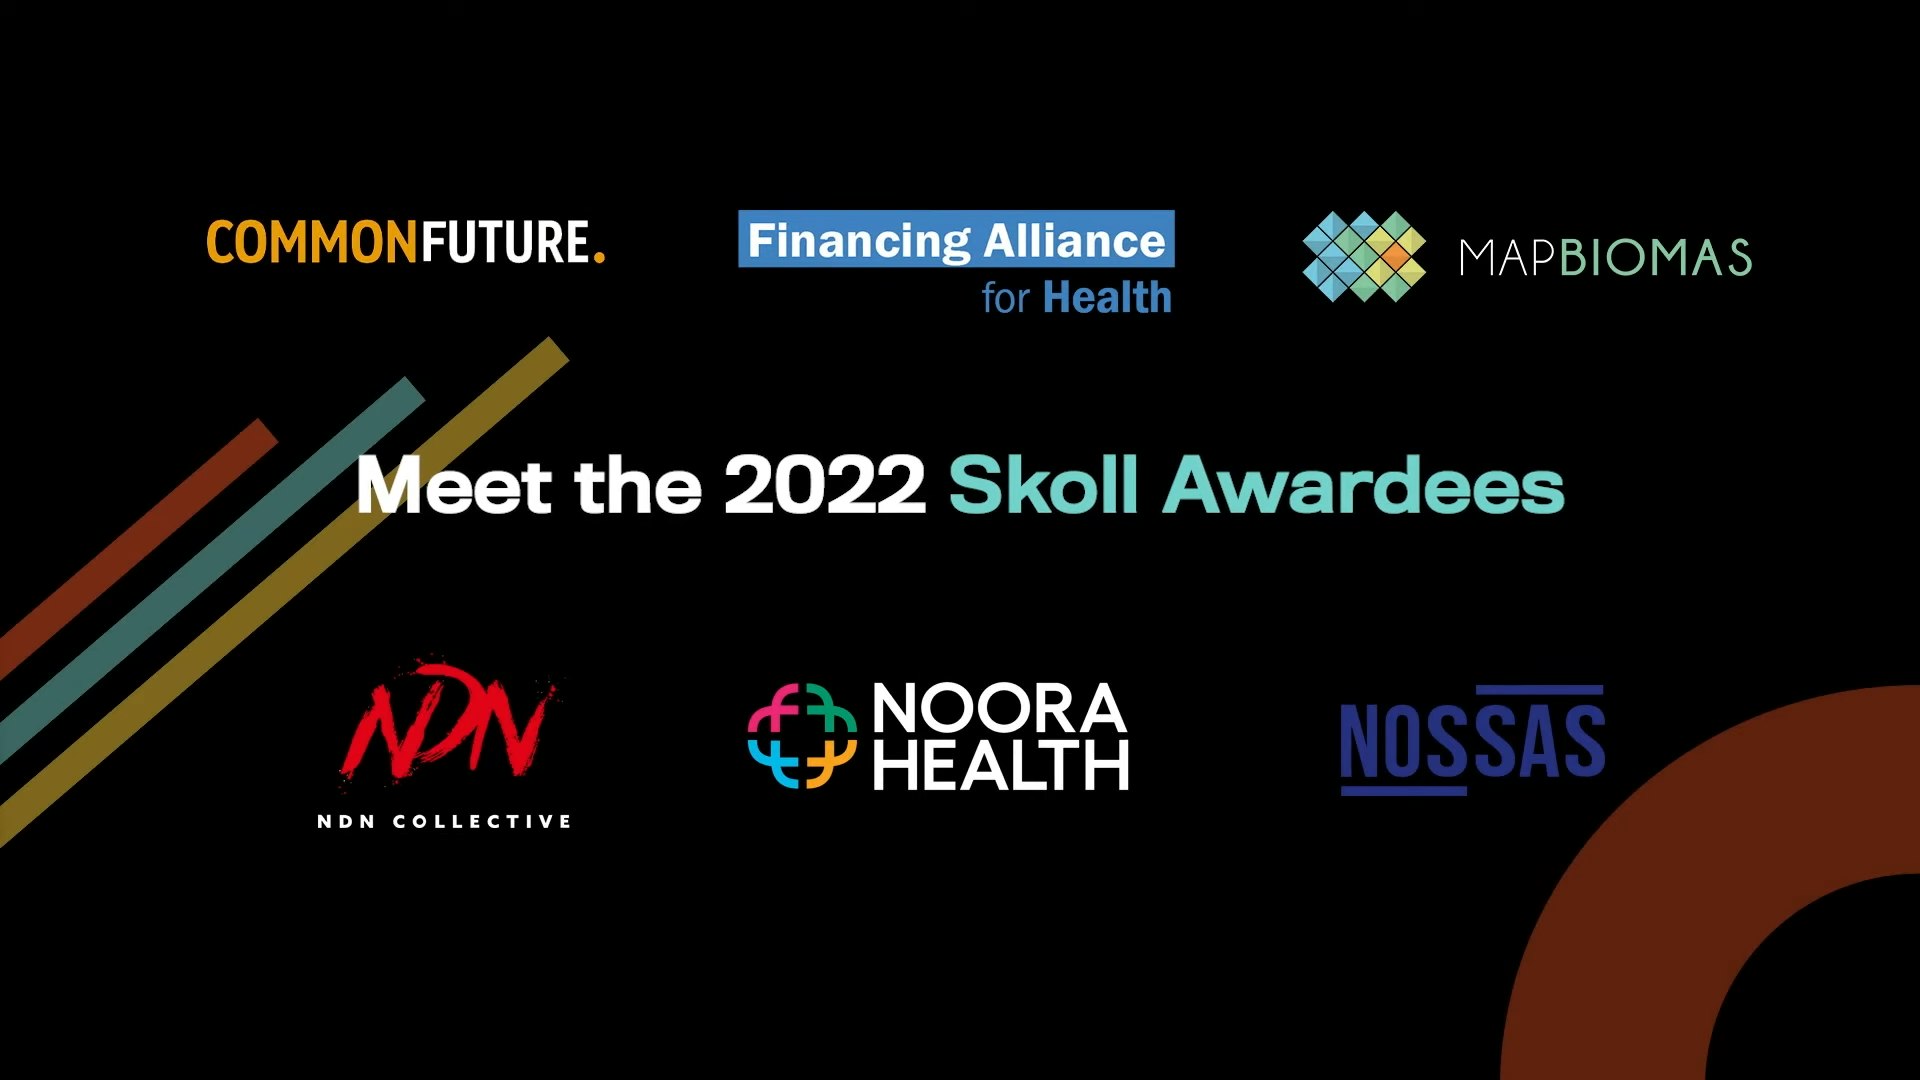 Winners Of The 2022 Skoll Award For Social Innovation 0 2 Screenshot